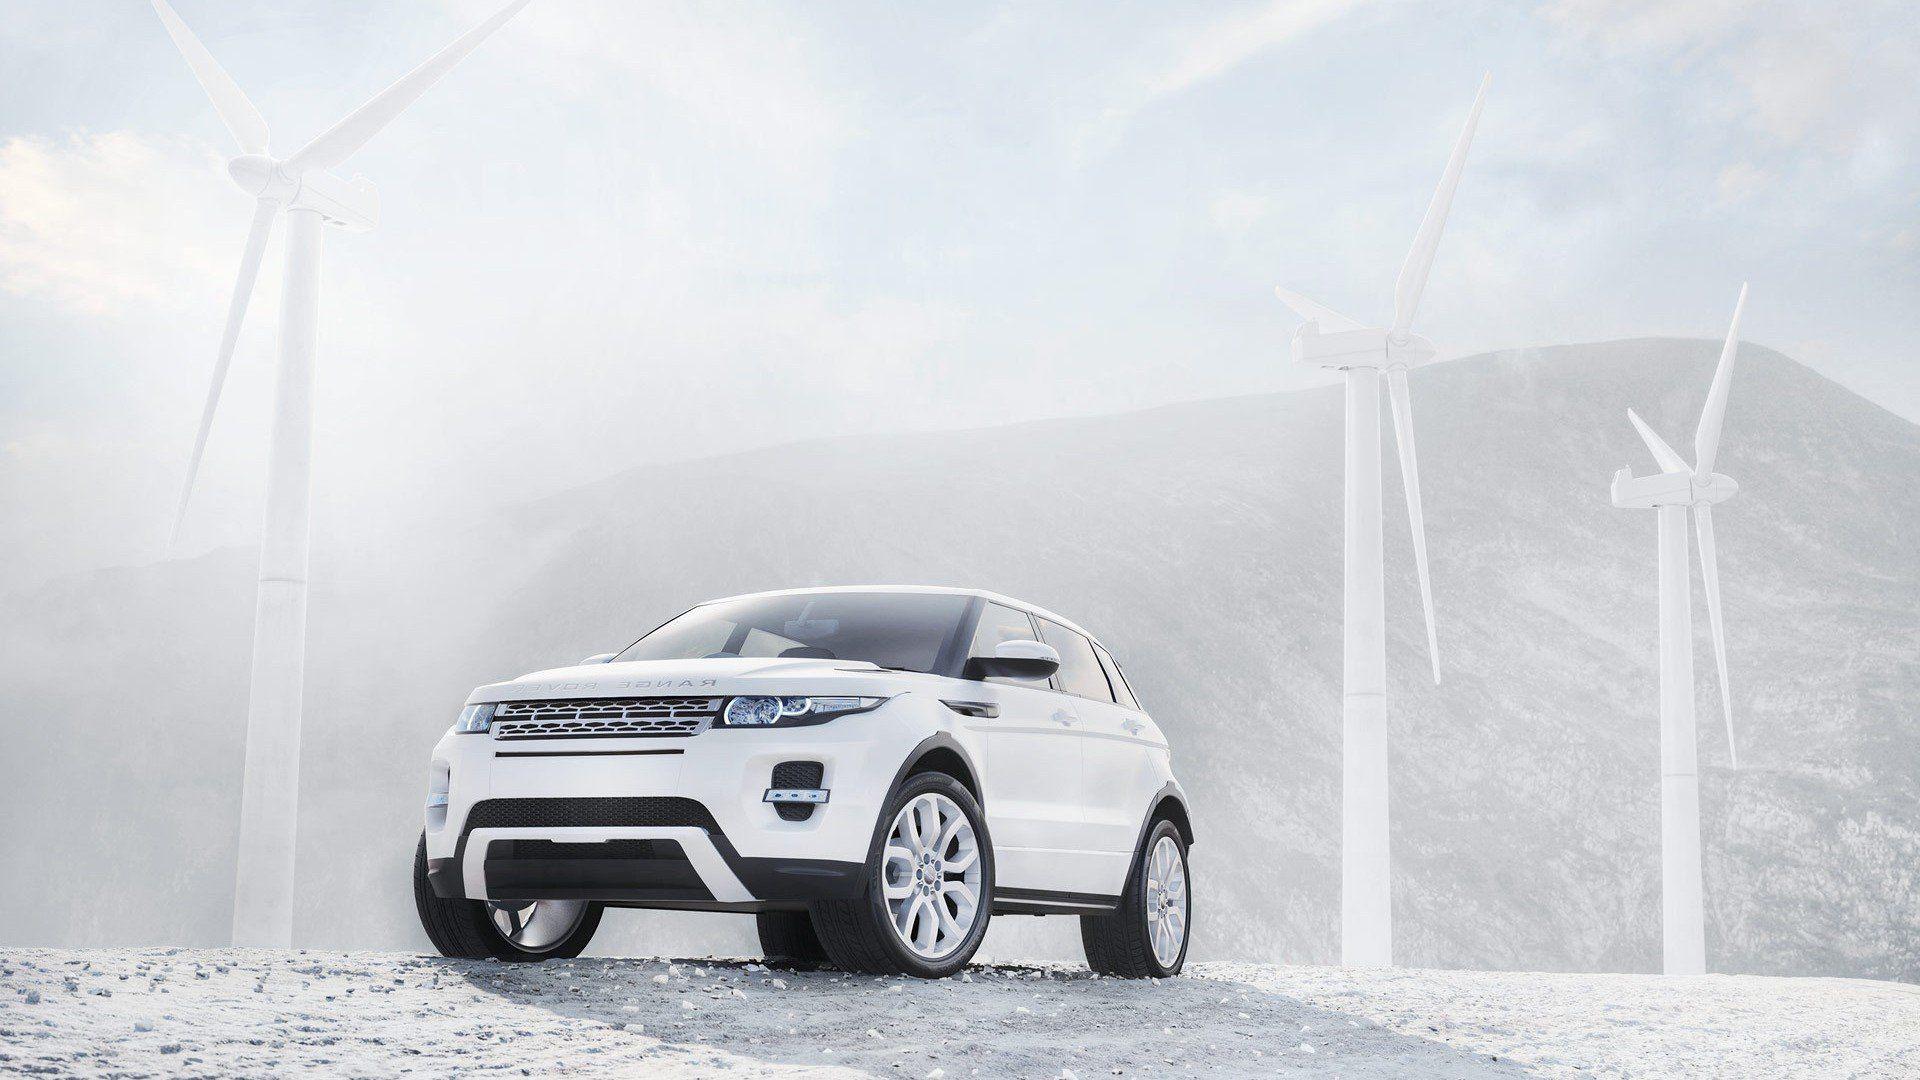 Range Rover White, HD Cars, 4k Wallpaper, Image, Background